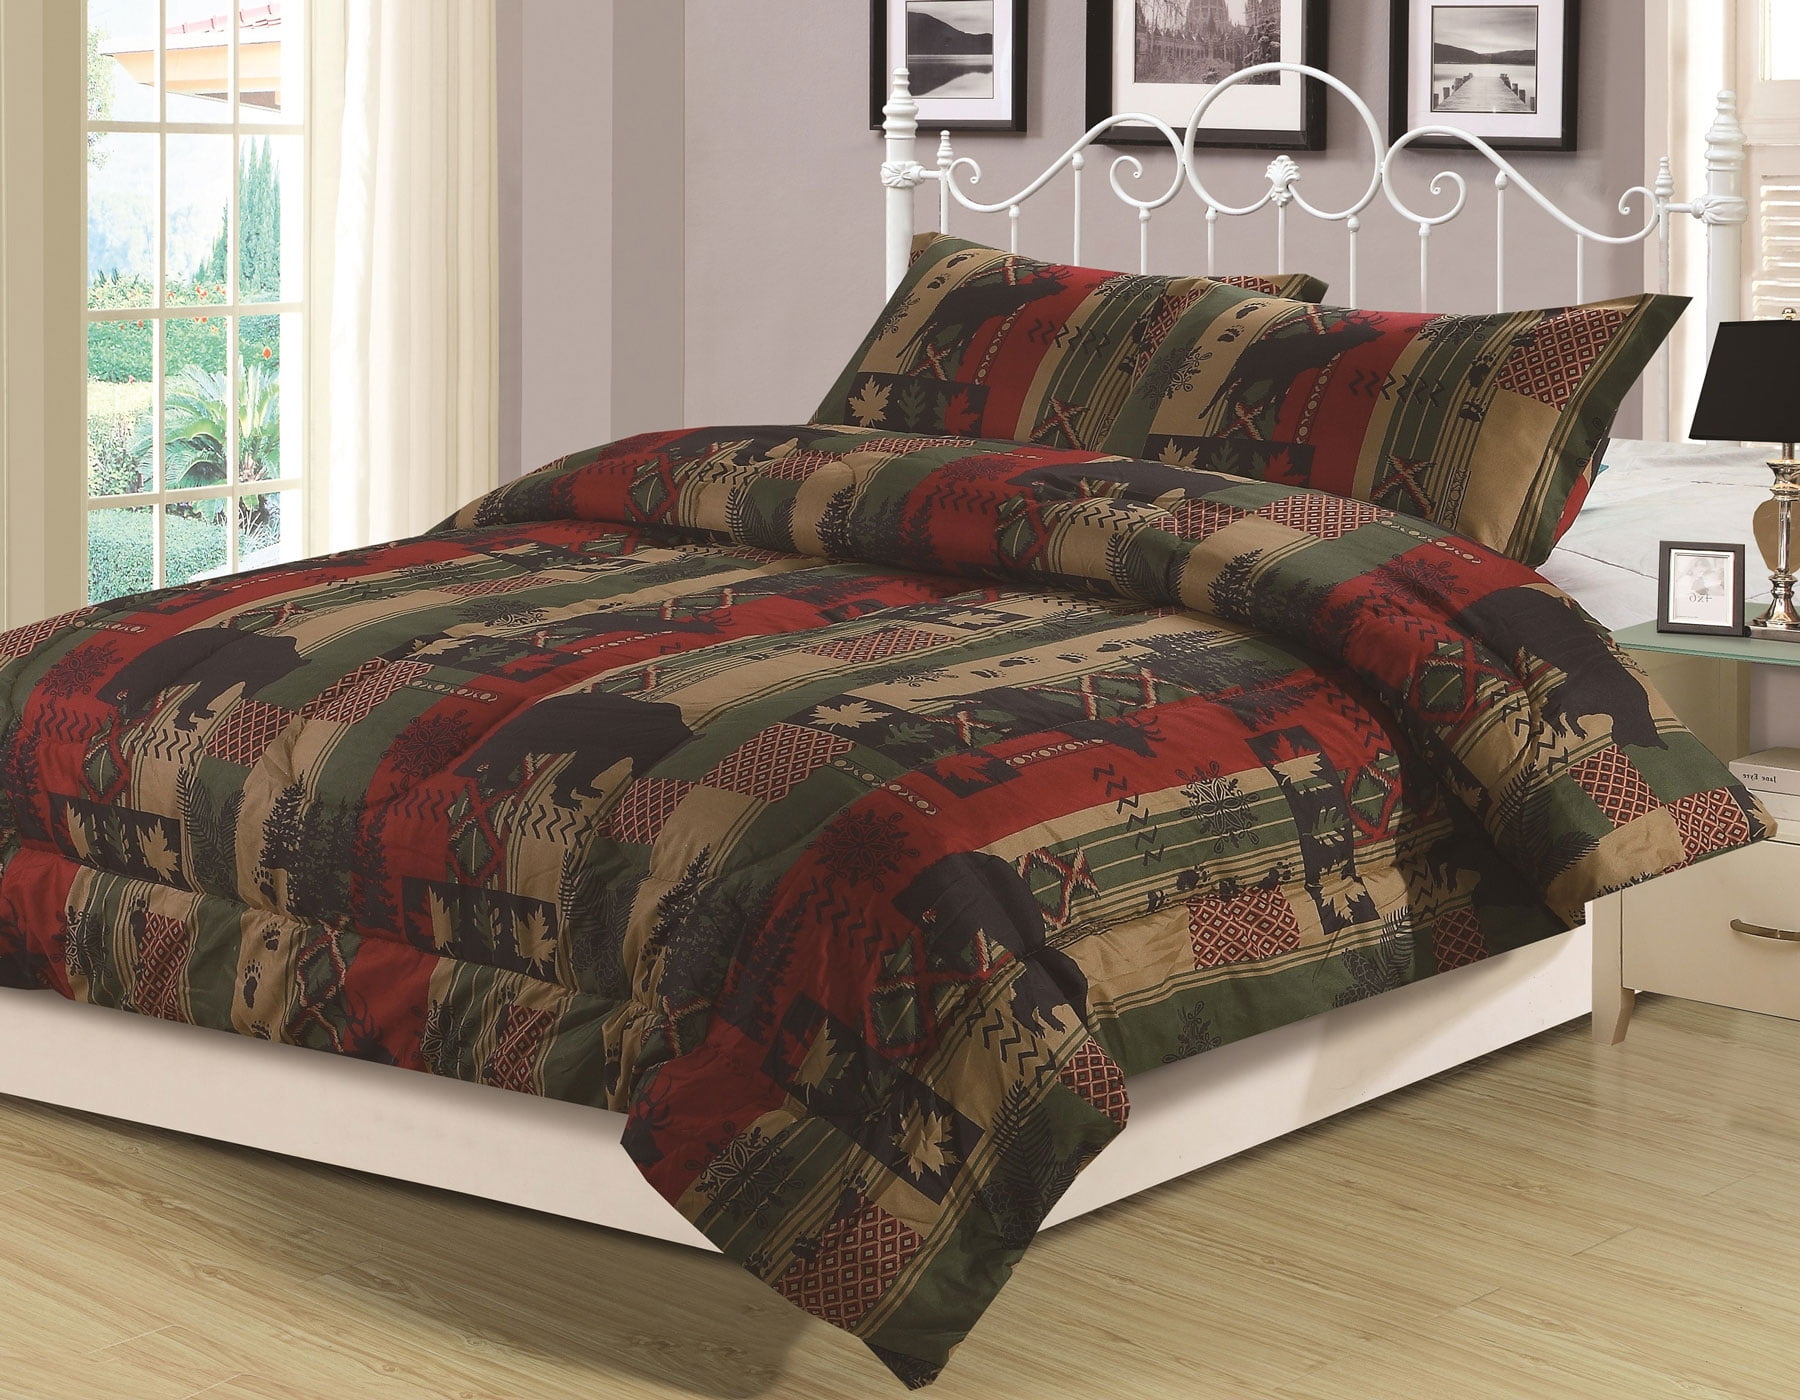 Rustic Southwest King Comforter 3 Piece, King Size Lodge Bedding